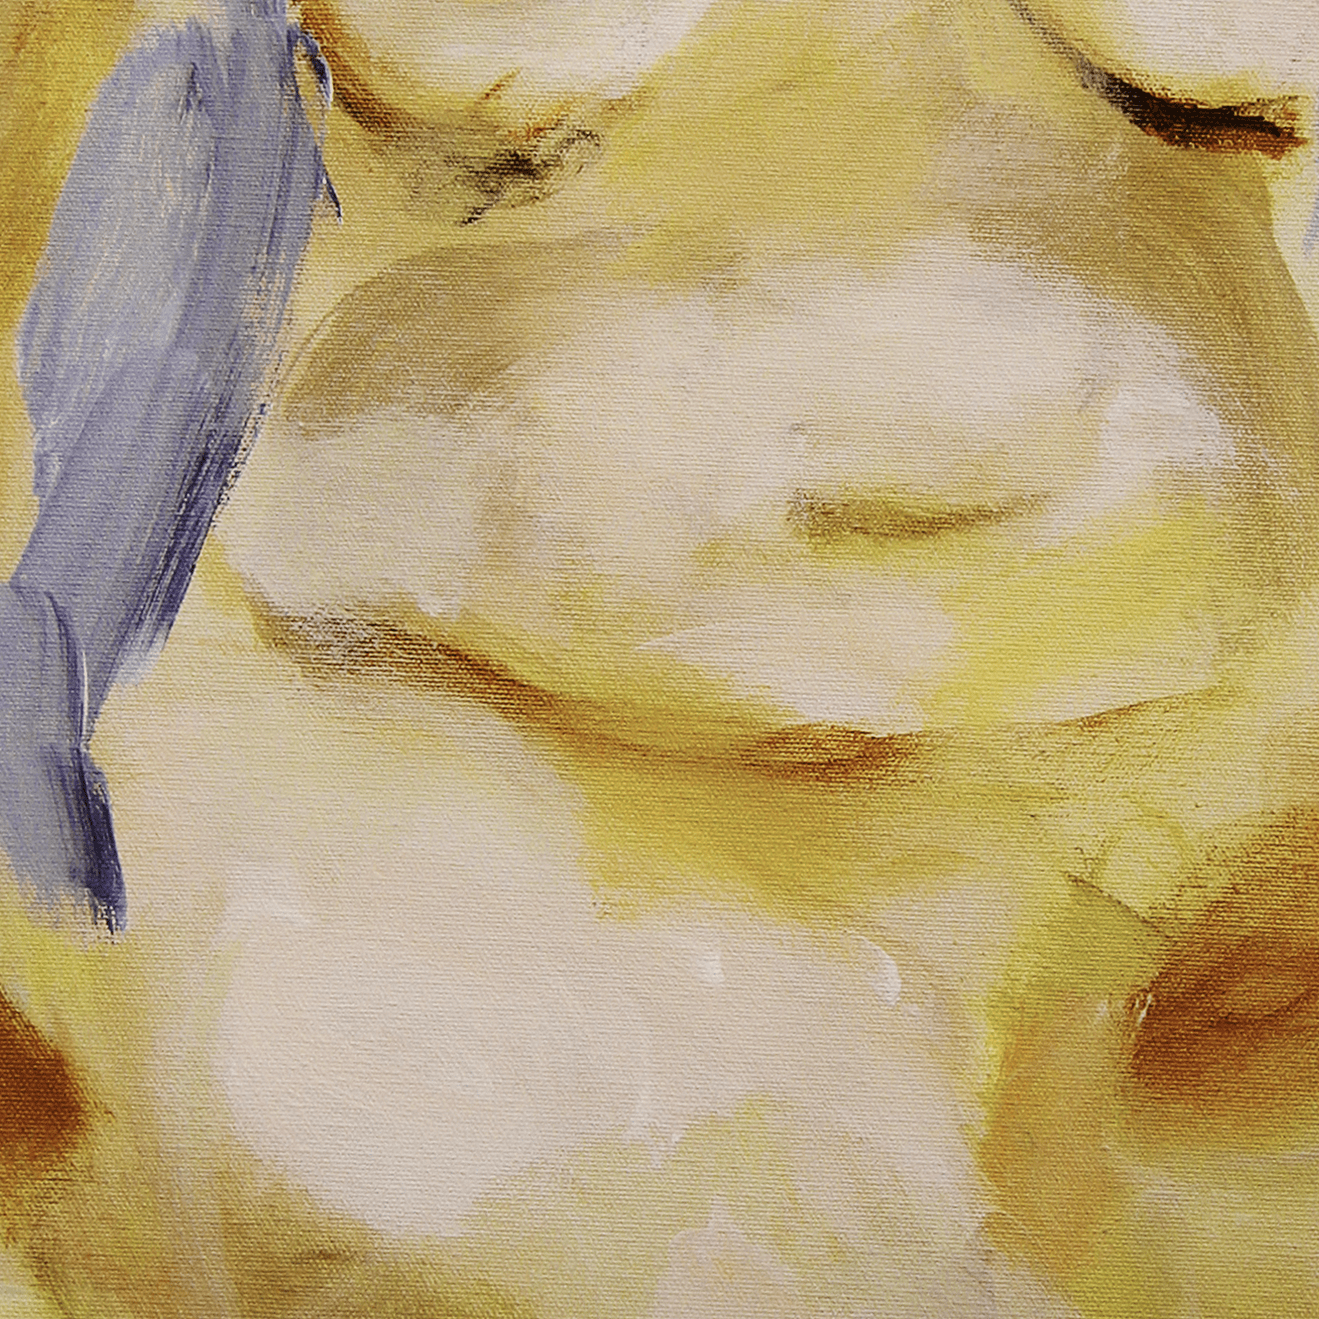 Pixels Art Print Abstract Nude